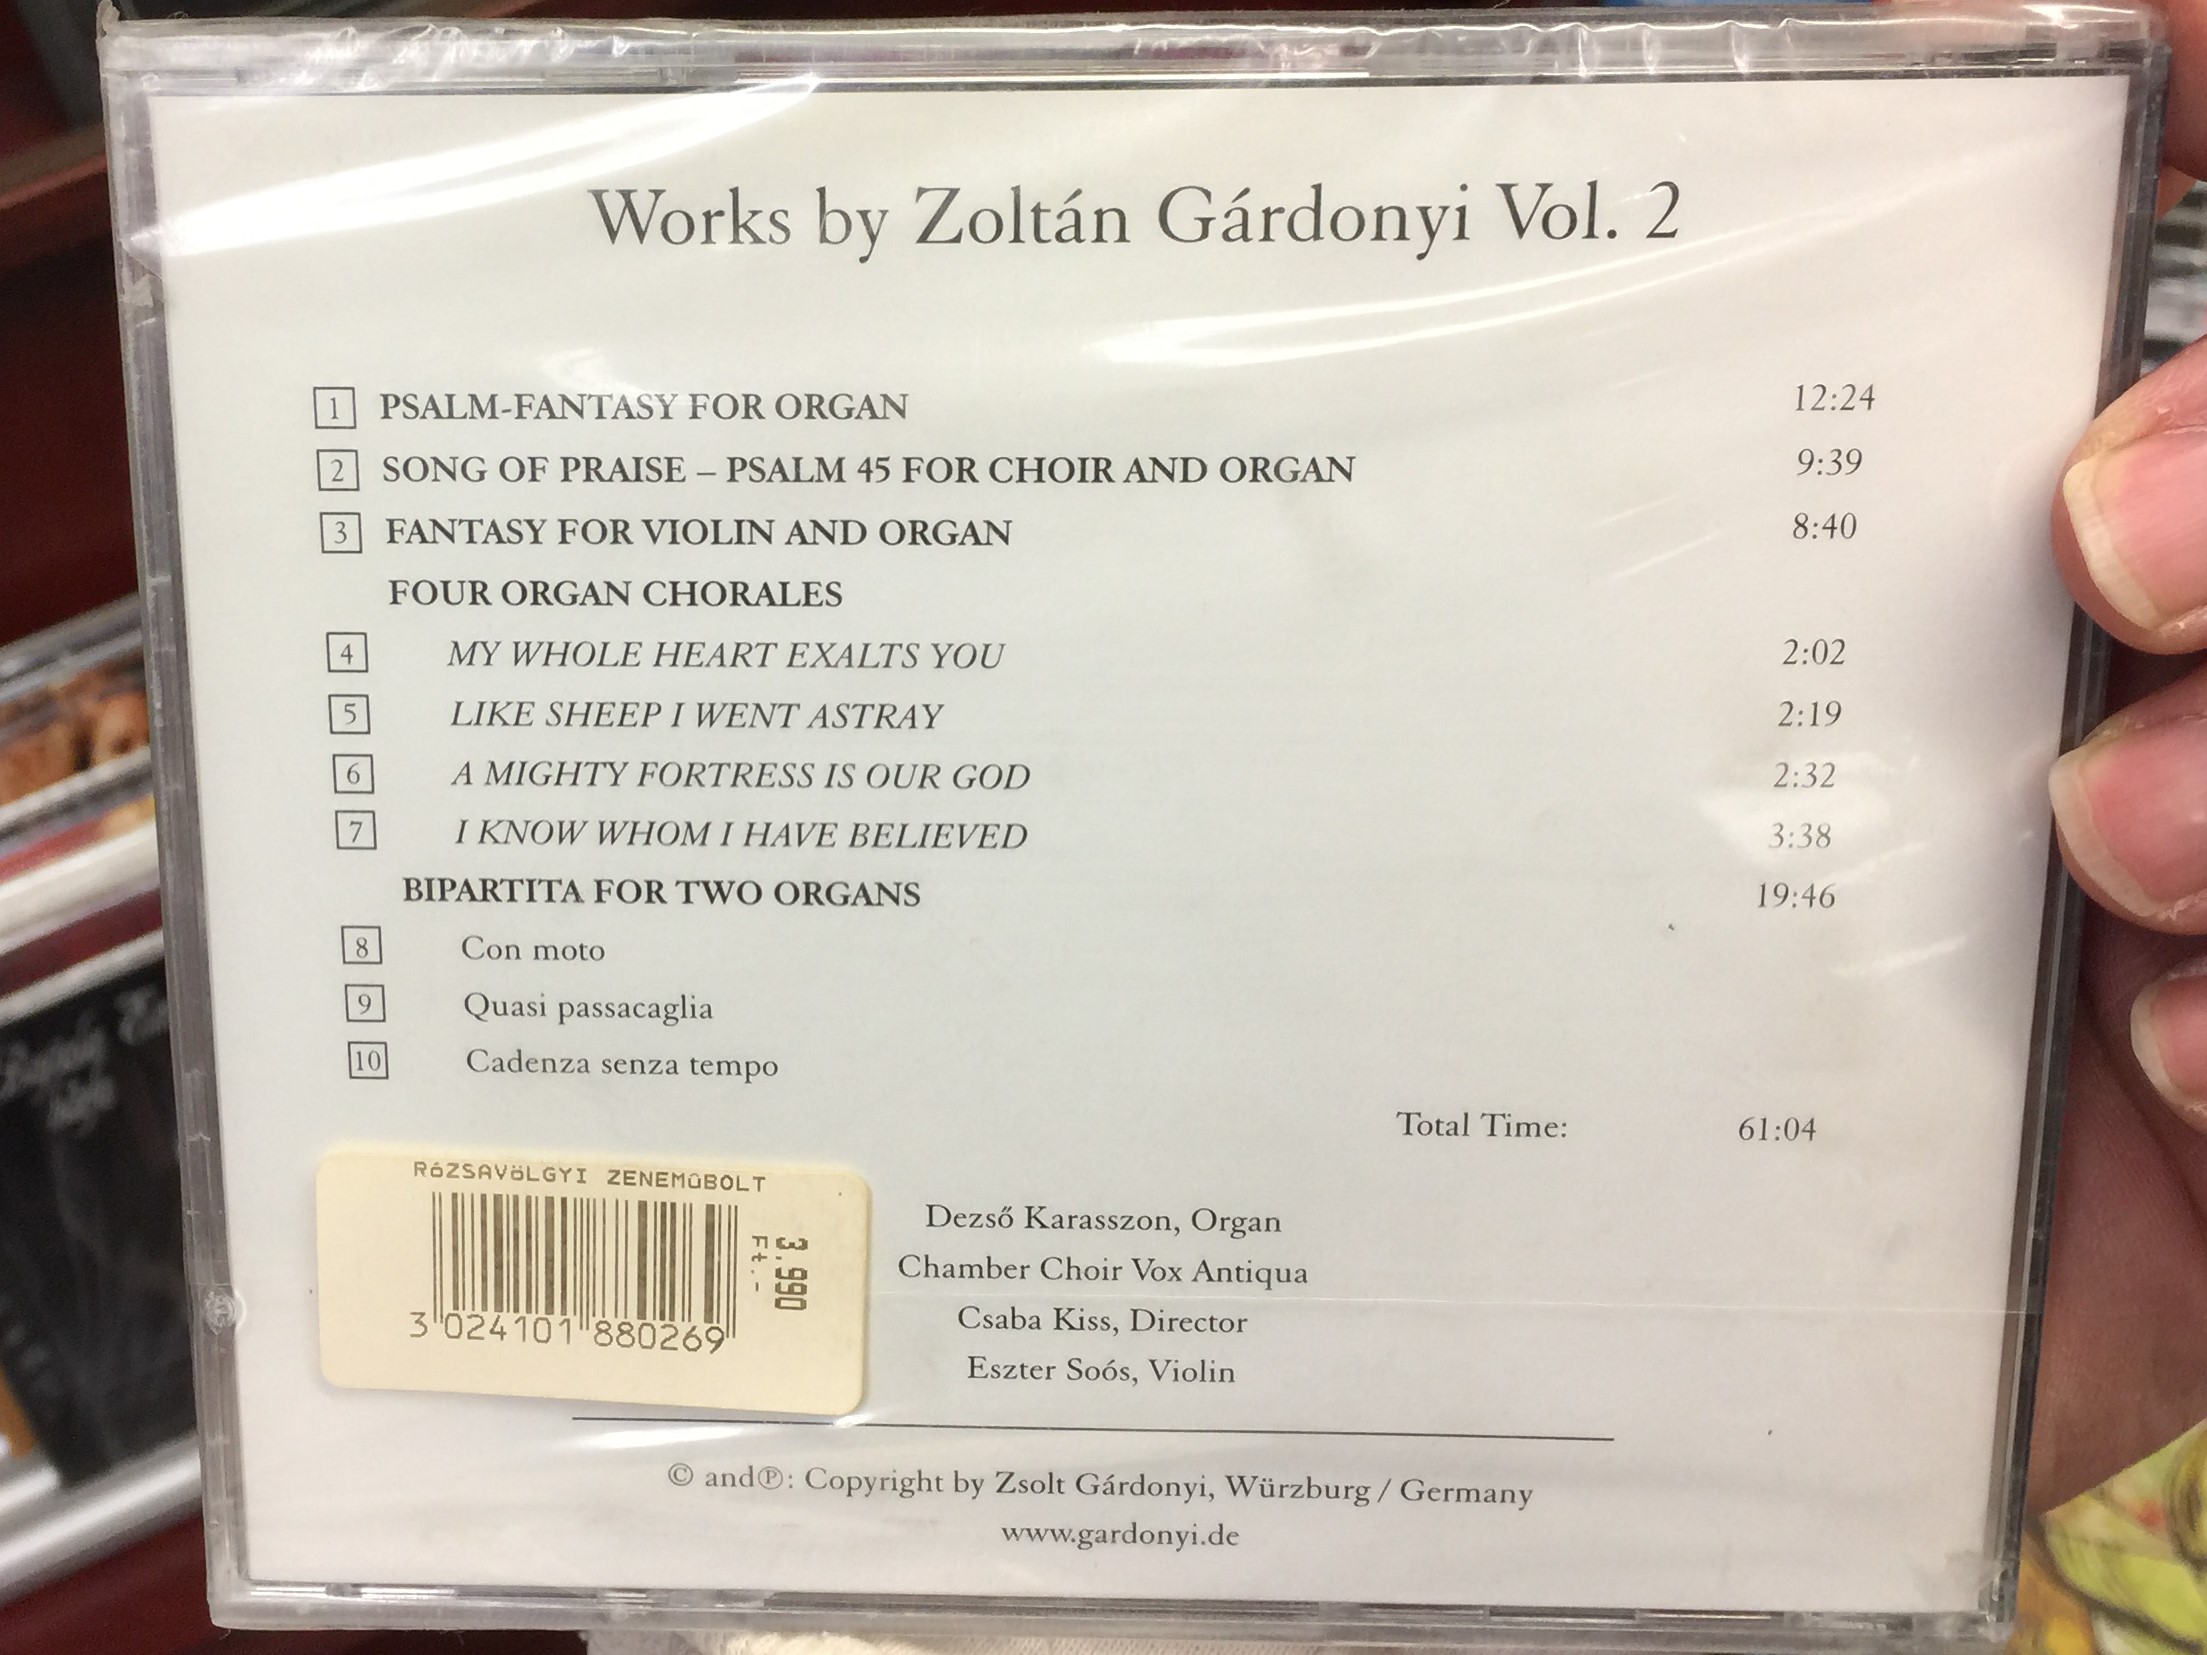 works-by-zoltan-gardonyi-vol.-2-for-organ-choir-violine-dezso-karasszon-organ-audio-cd-3024101880269-2-.jpg